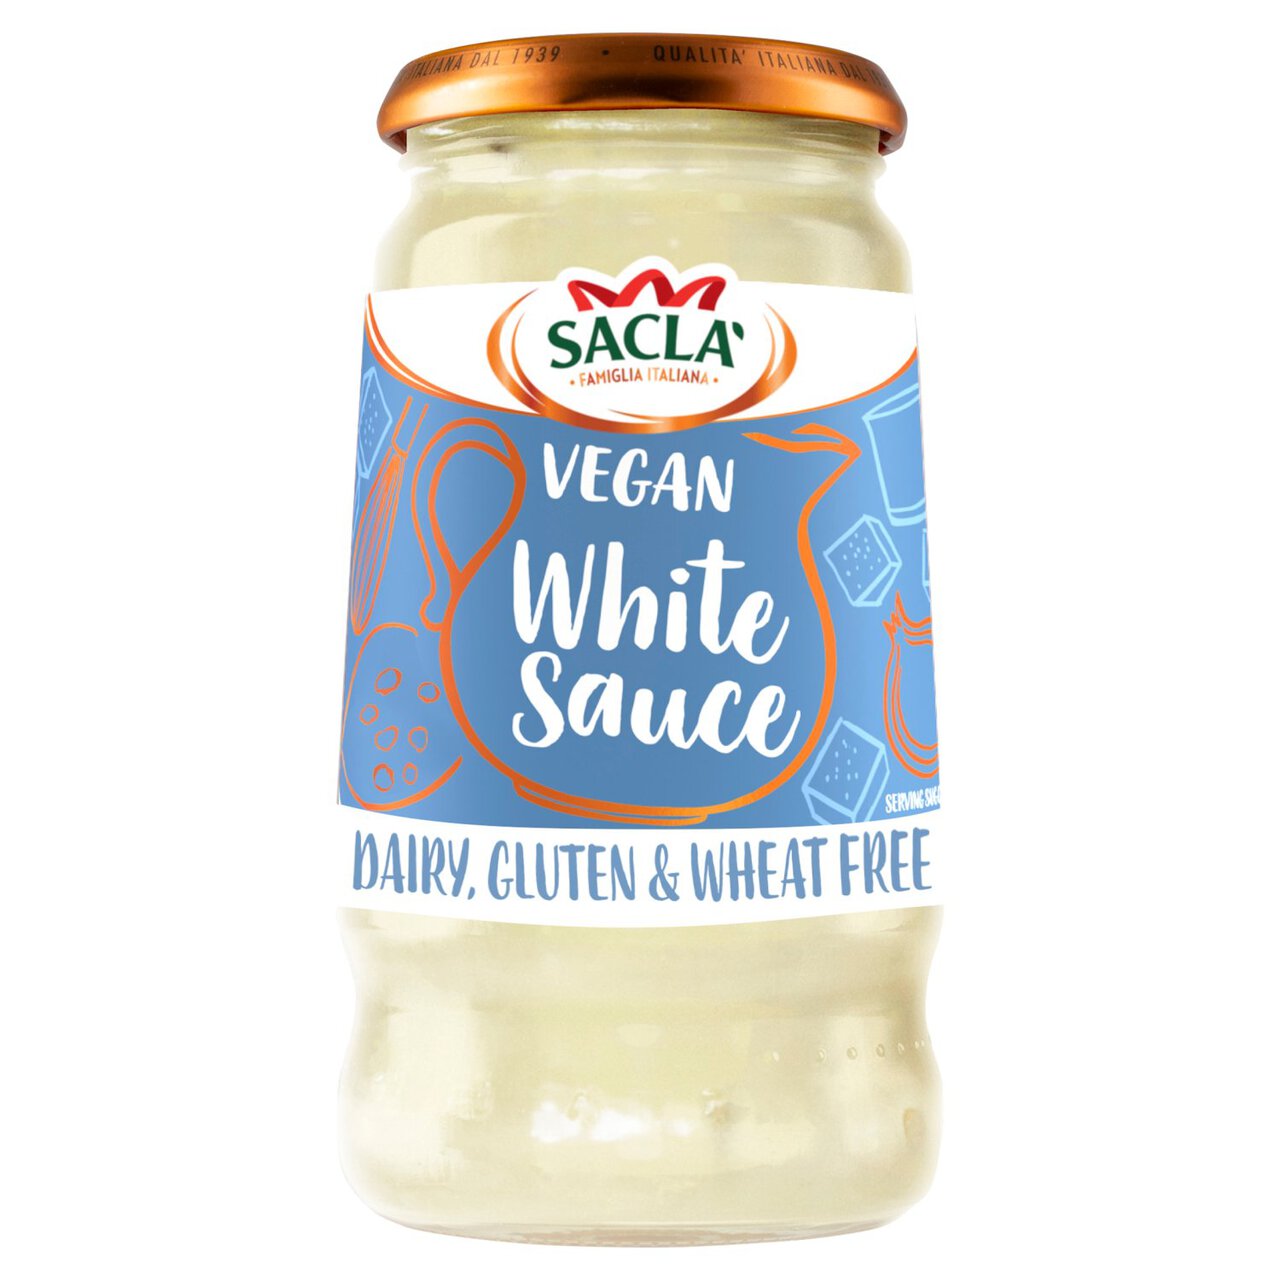 Sacla' Vegan White Sauce 350g